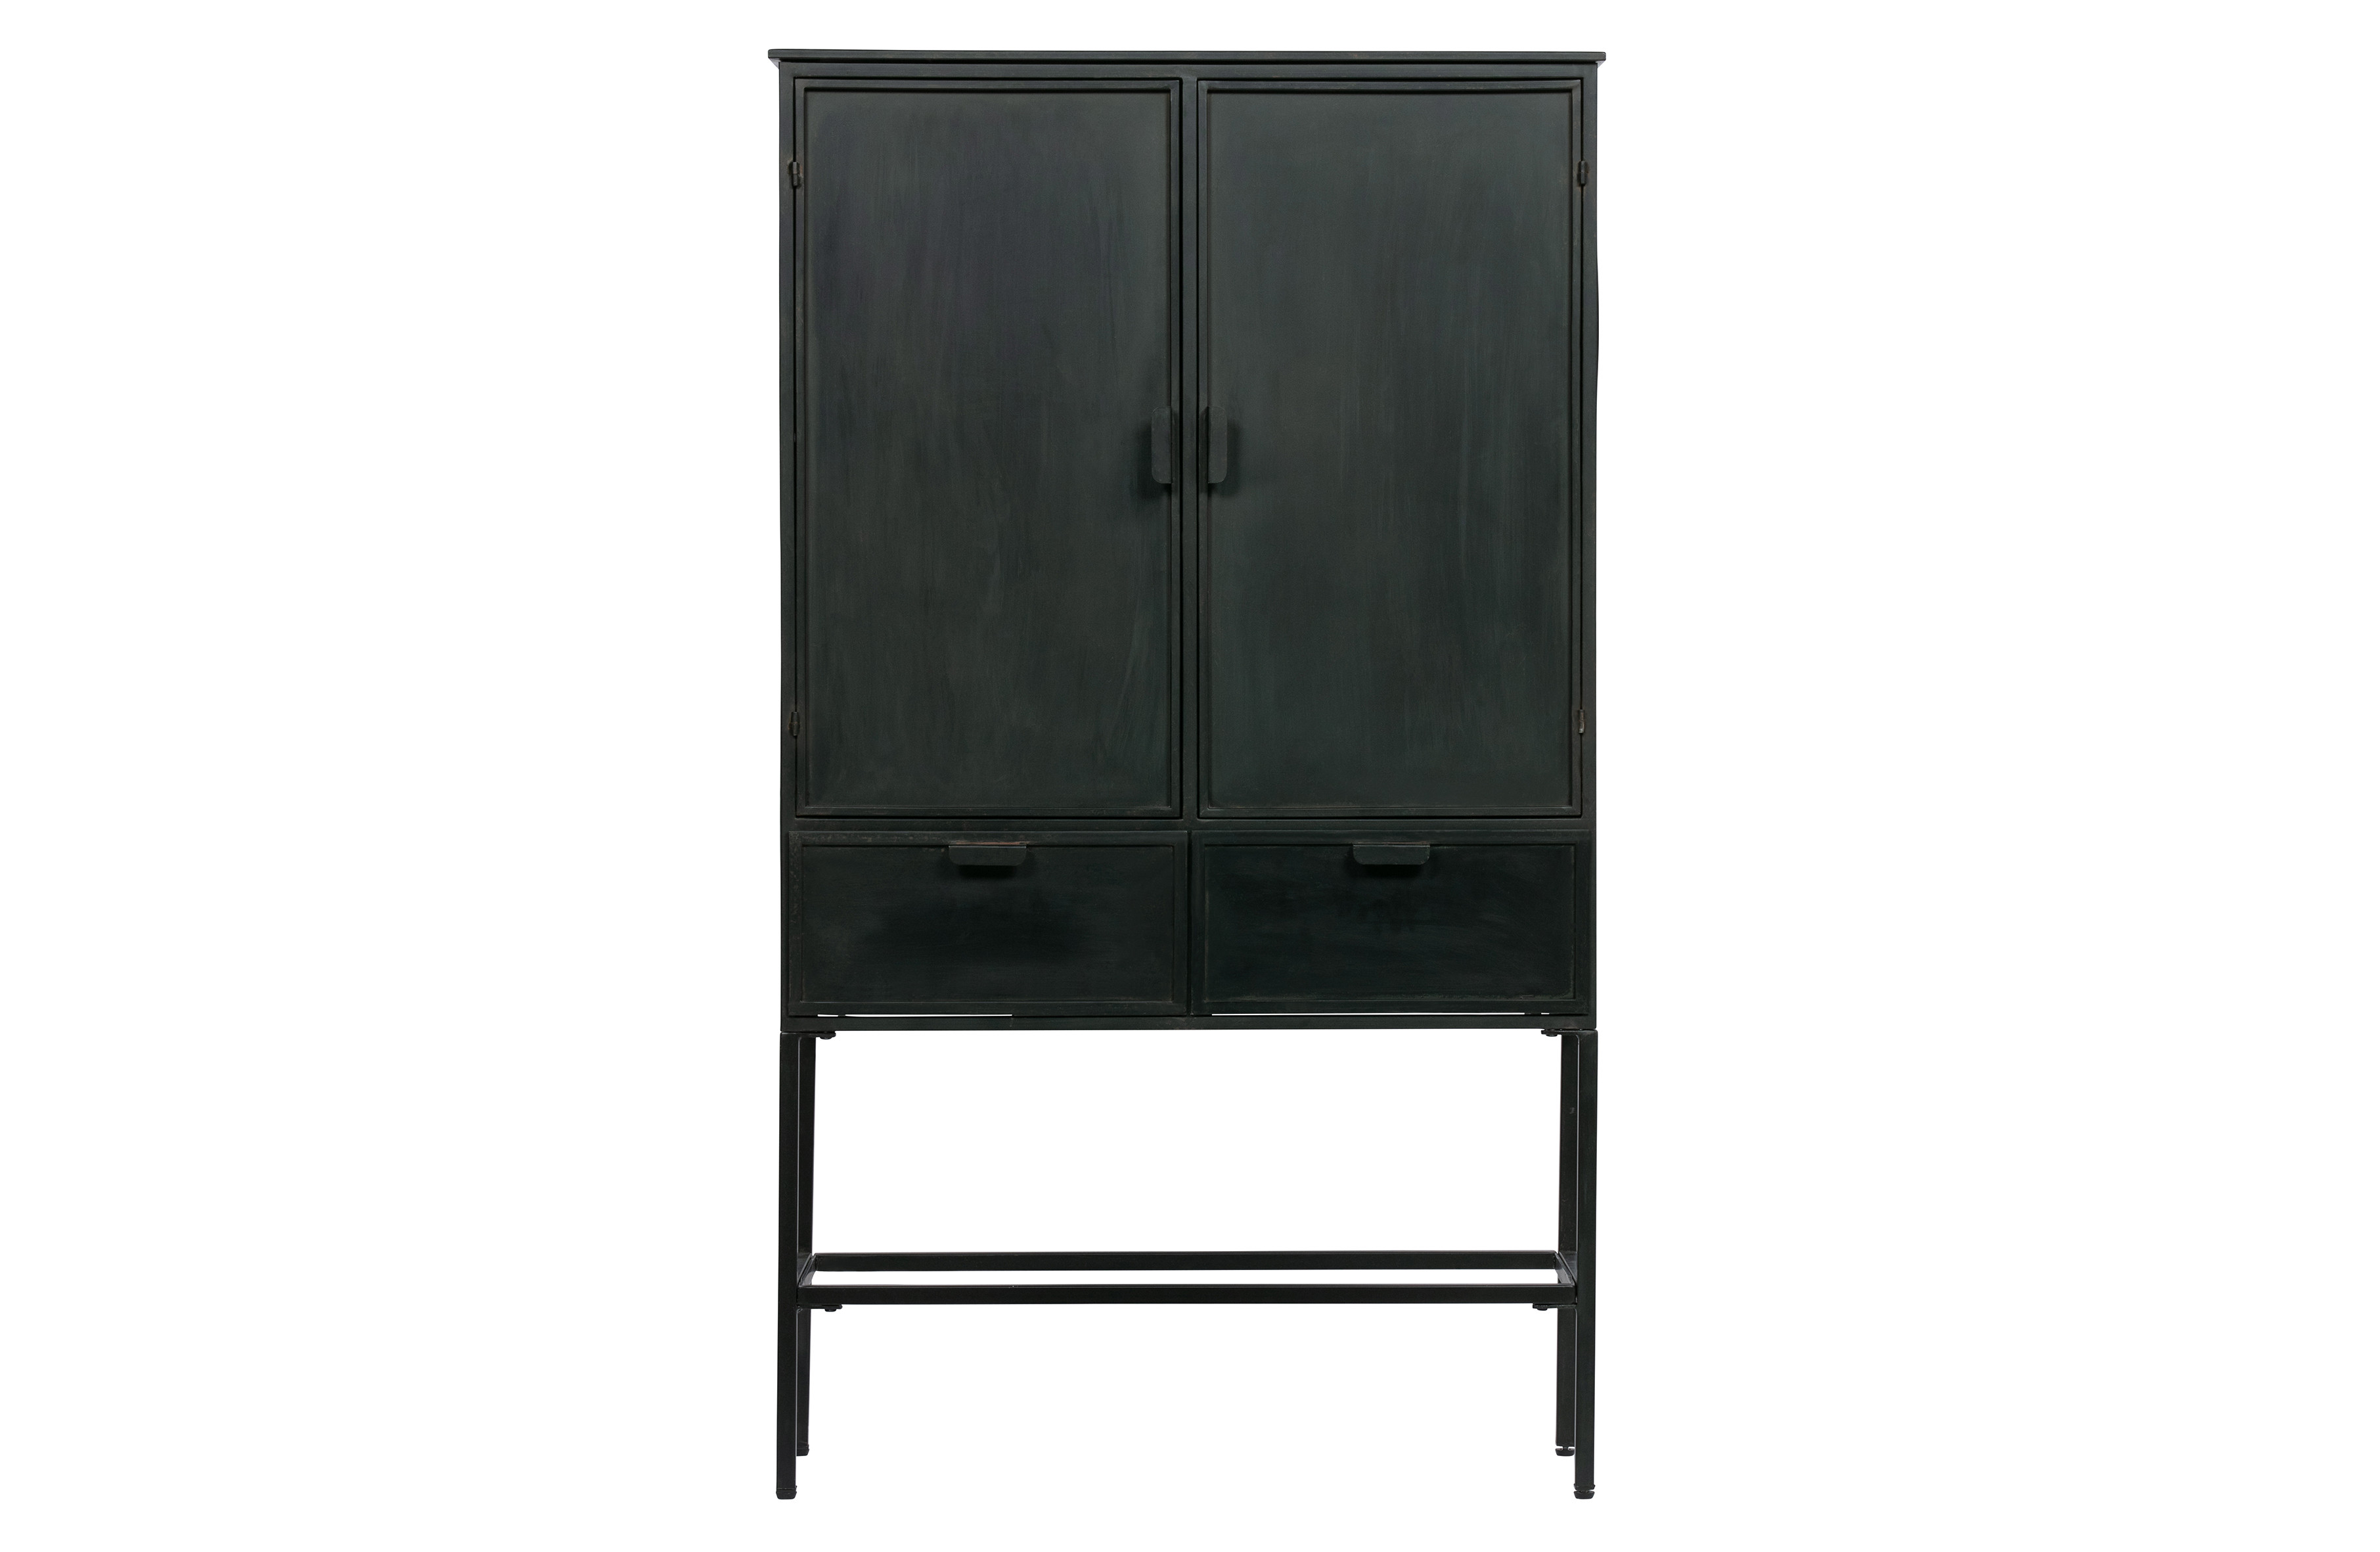 Rent a Cabinet Wish 2doors black? Rent at KeyPro furniture rental!